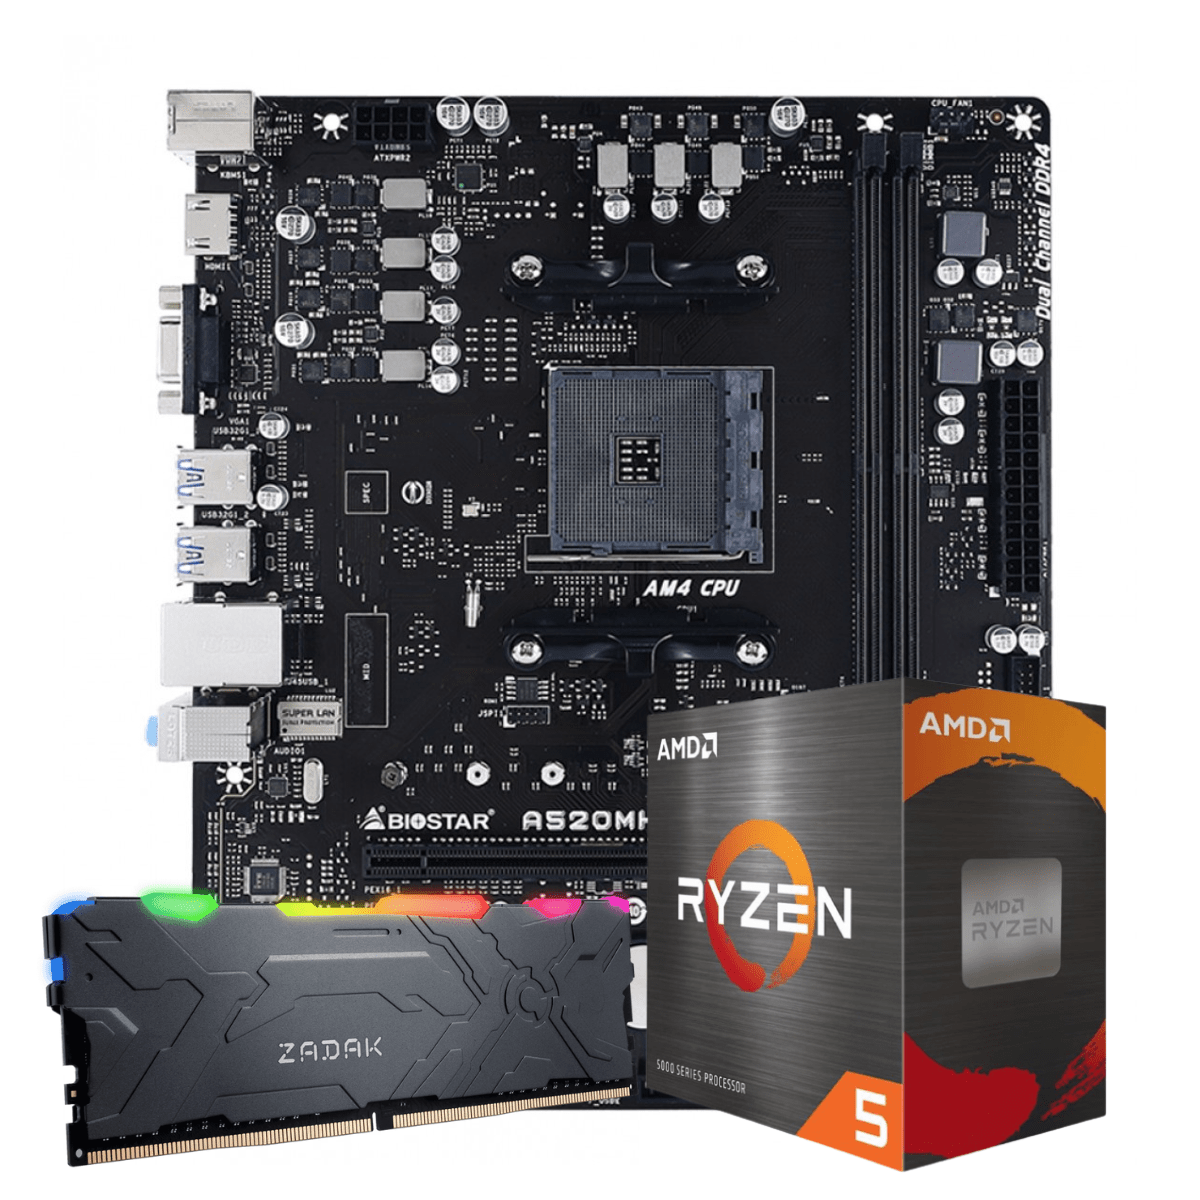 Kit Upgrade AMD Ryzen 5 4600G + Placa Mãe Biostar A520MH + 8GB DDR4